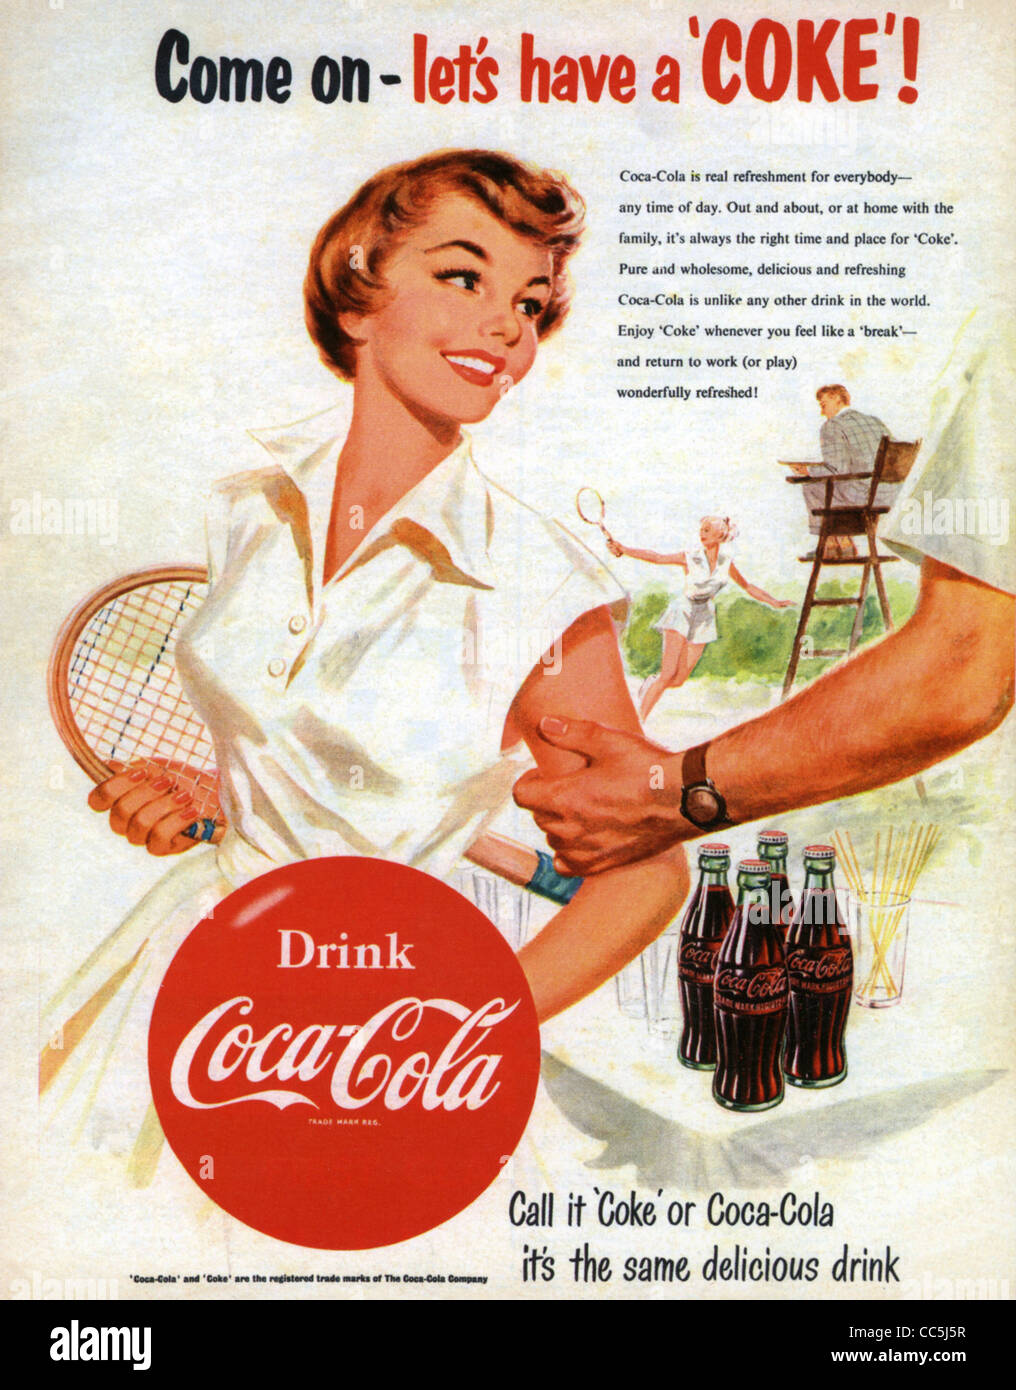 COCA-COLA advert about 1960 Stock Photo: 41920643 - Alamy 1960s Soda Advertising